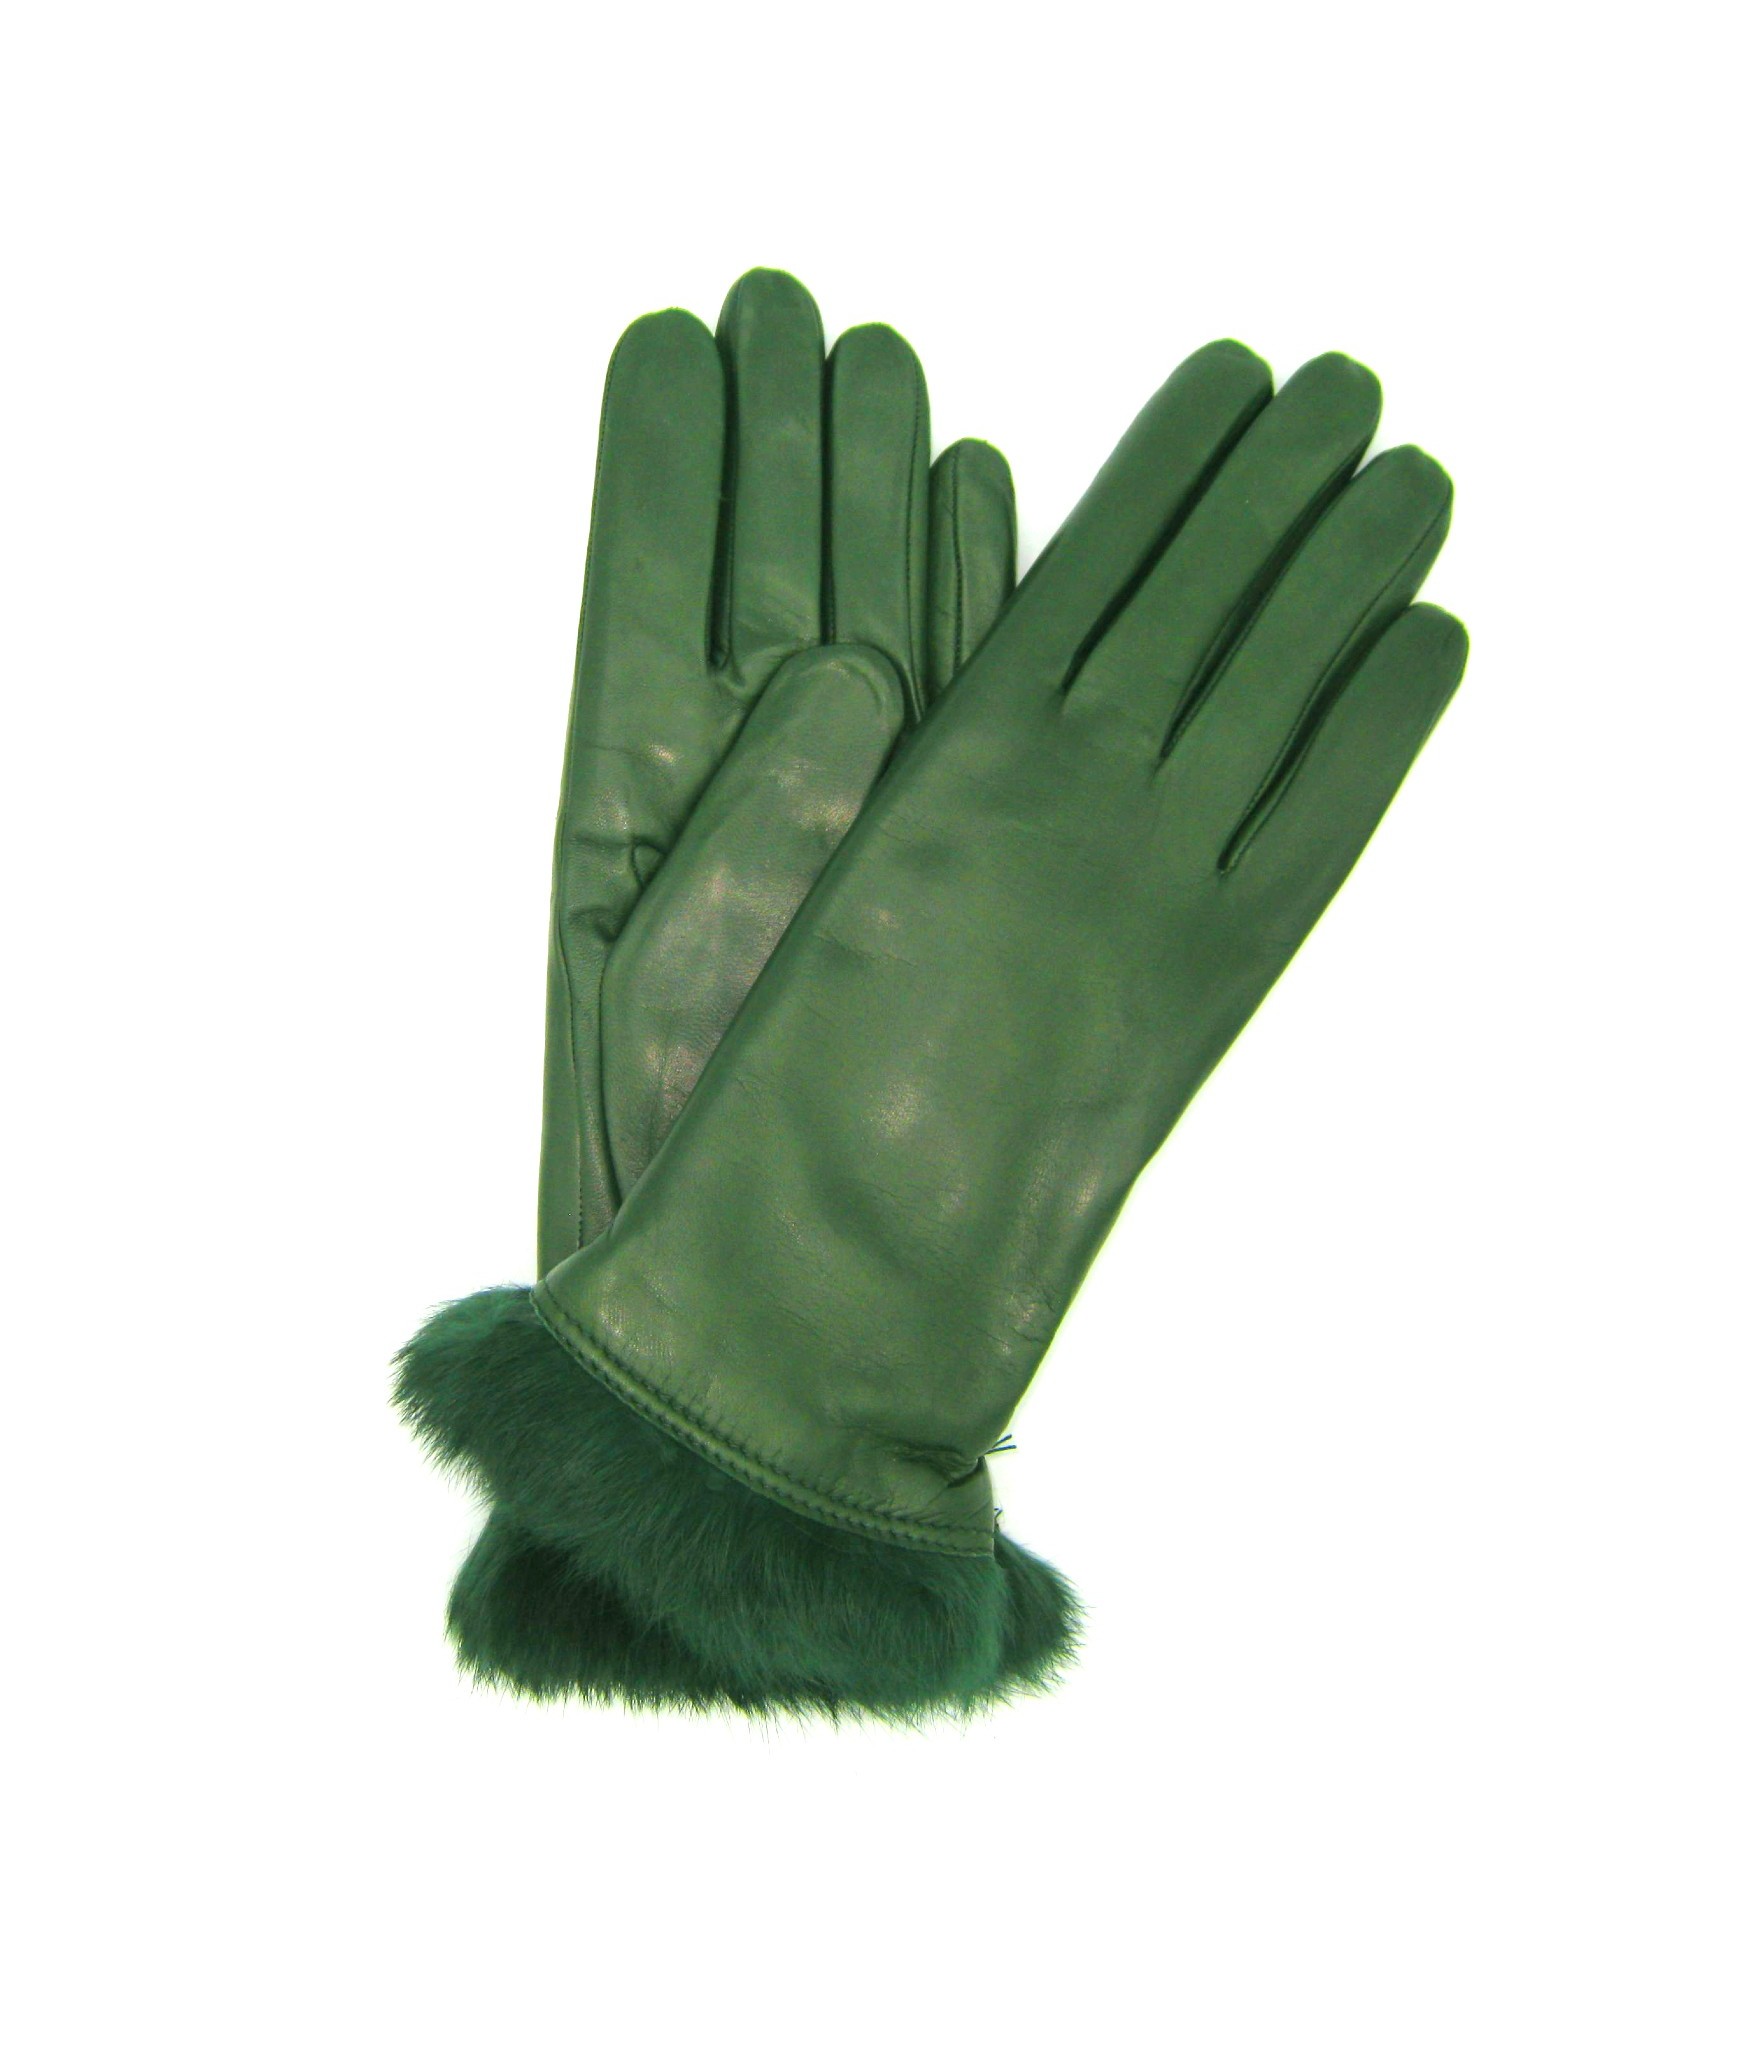 Nappa leather gloves 4bt  Rabbir fur lined  Olive Green